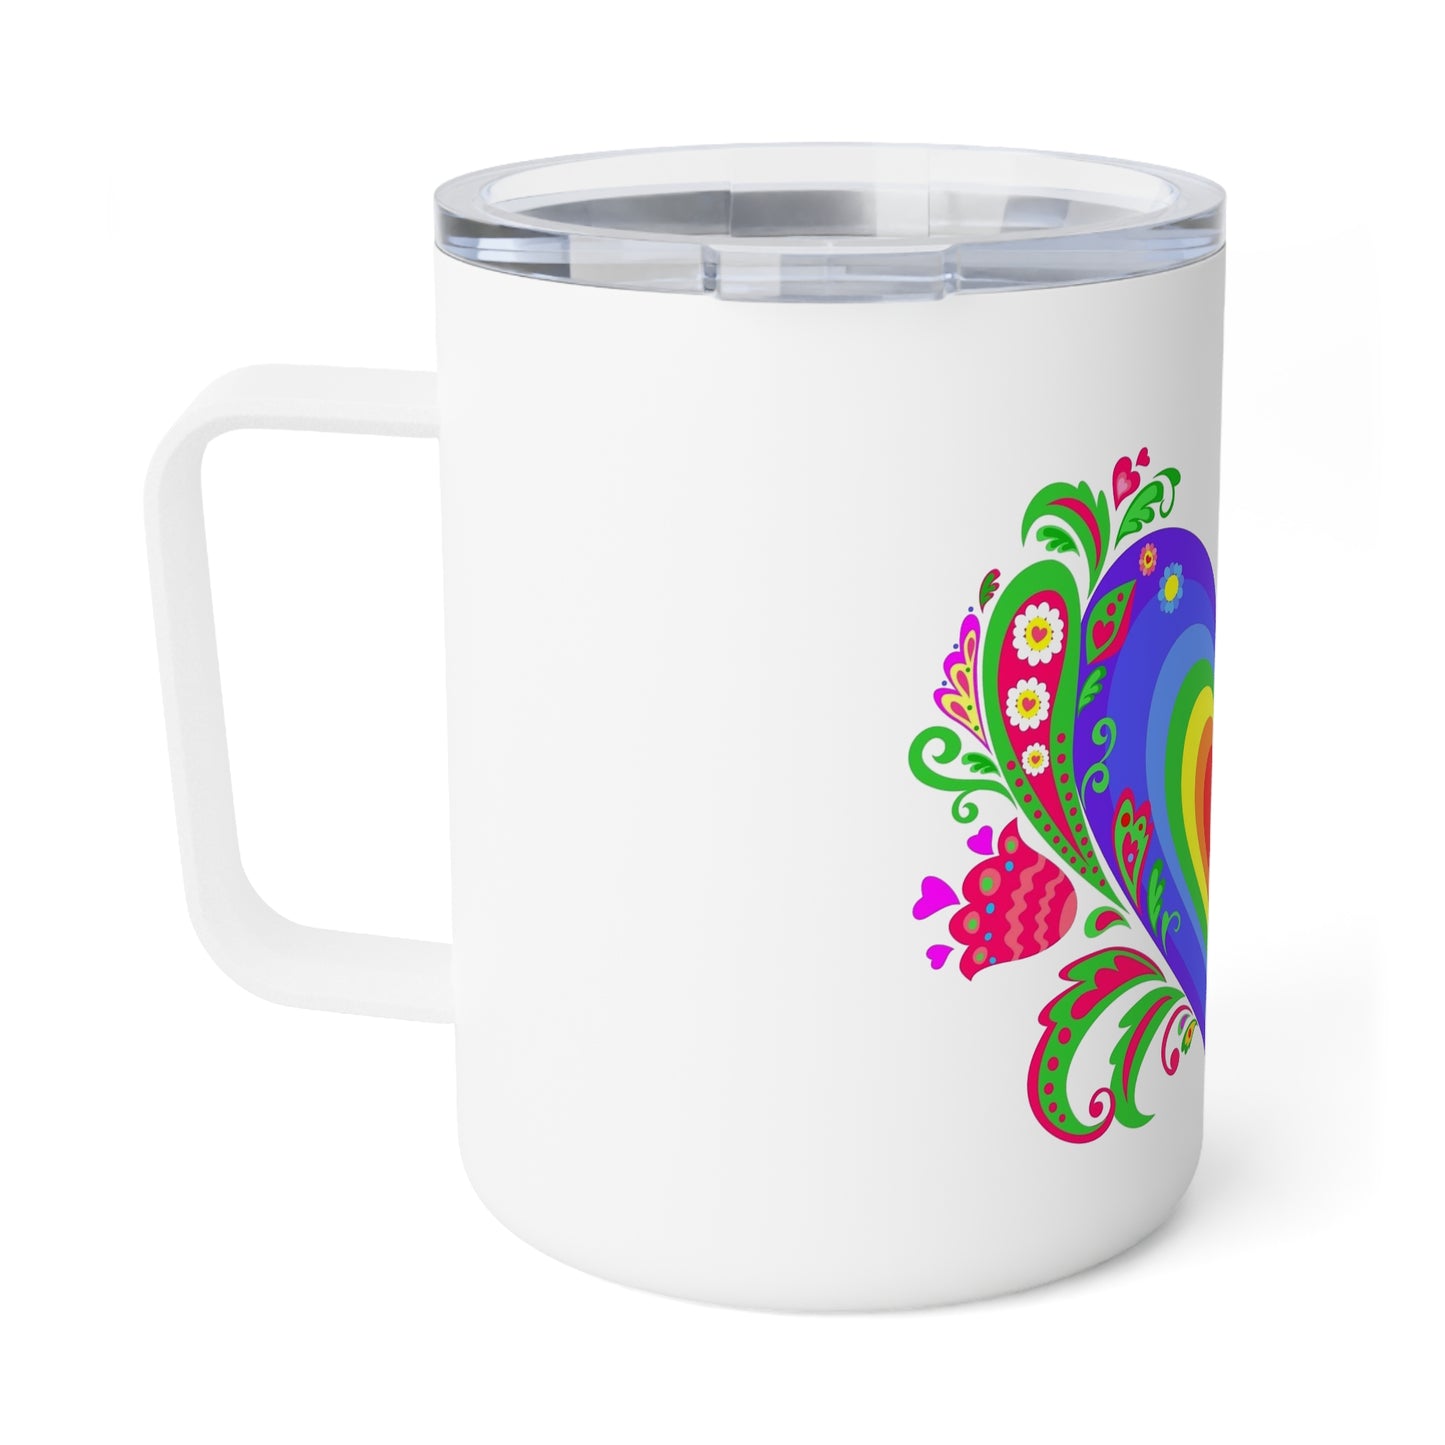 Hippie Heart | Insulated Coffee Mug, 10oz